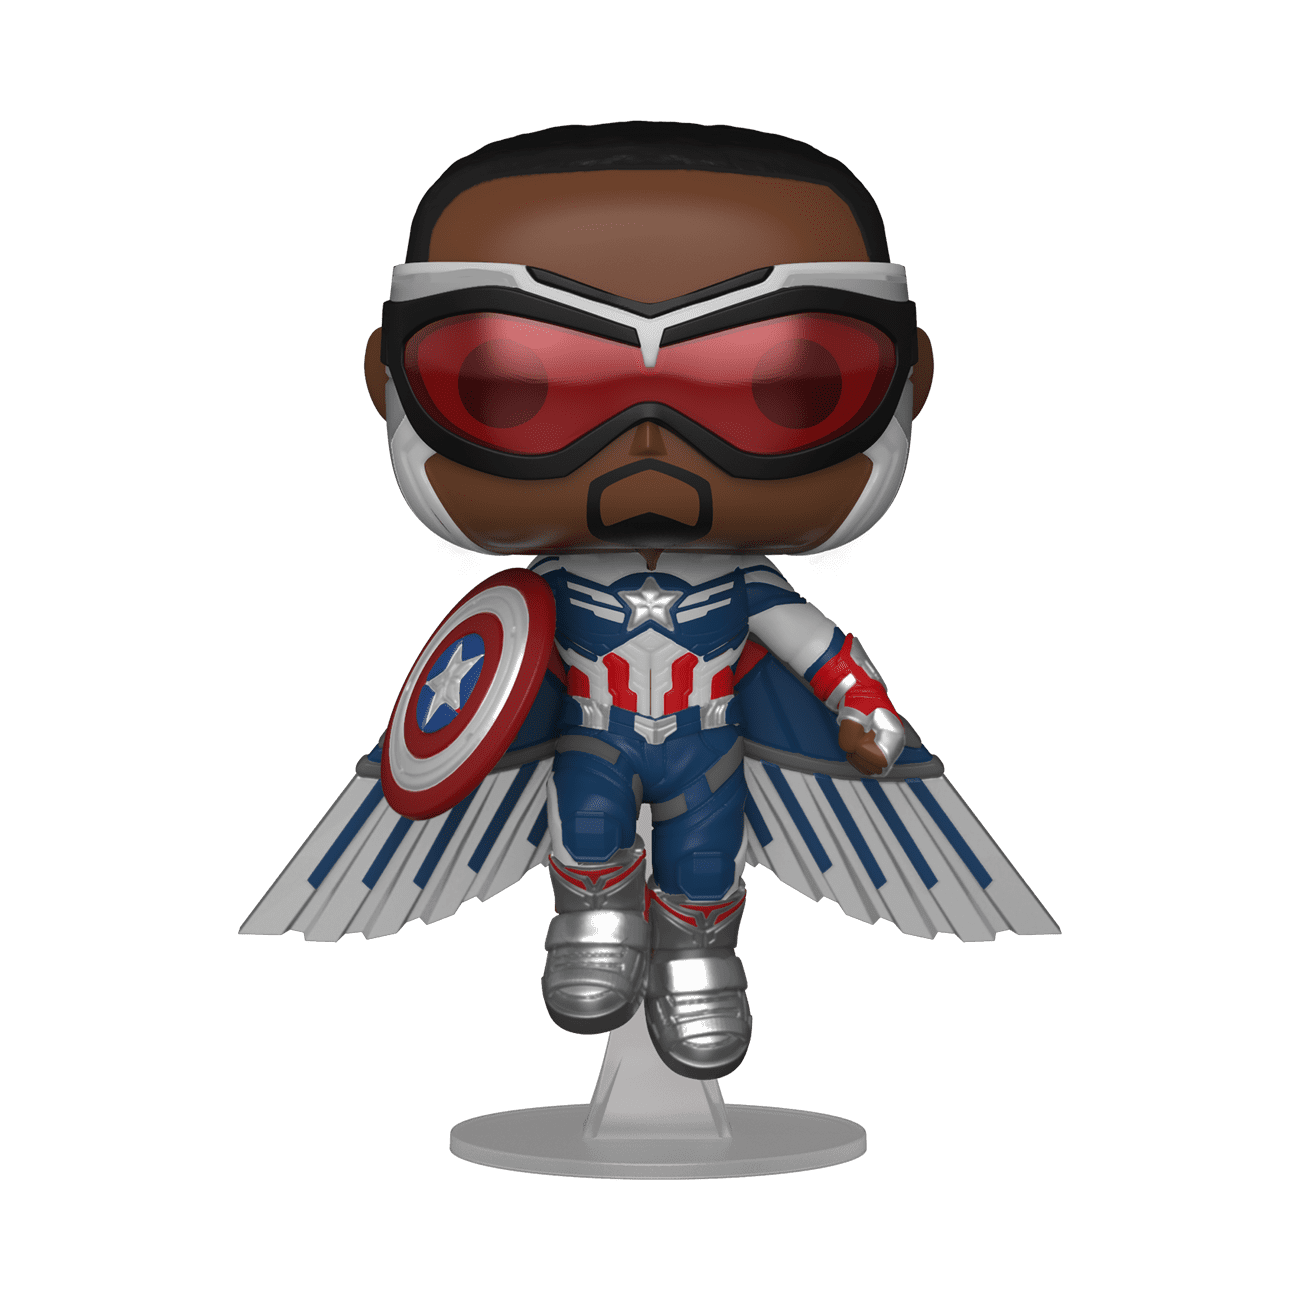 Captain America 3 Civil War Mystery Minis Vinyl Figures Falcon 